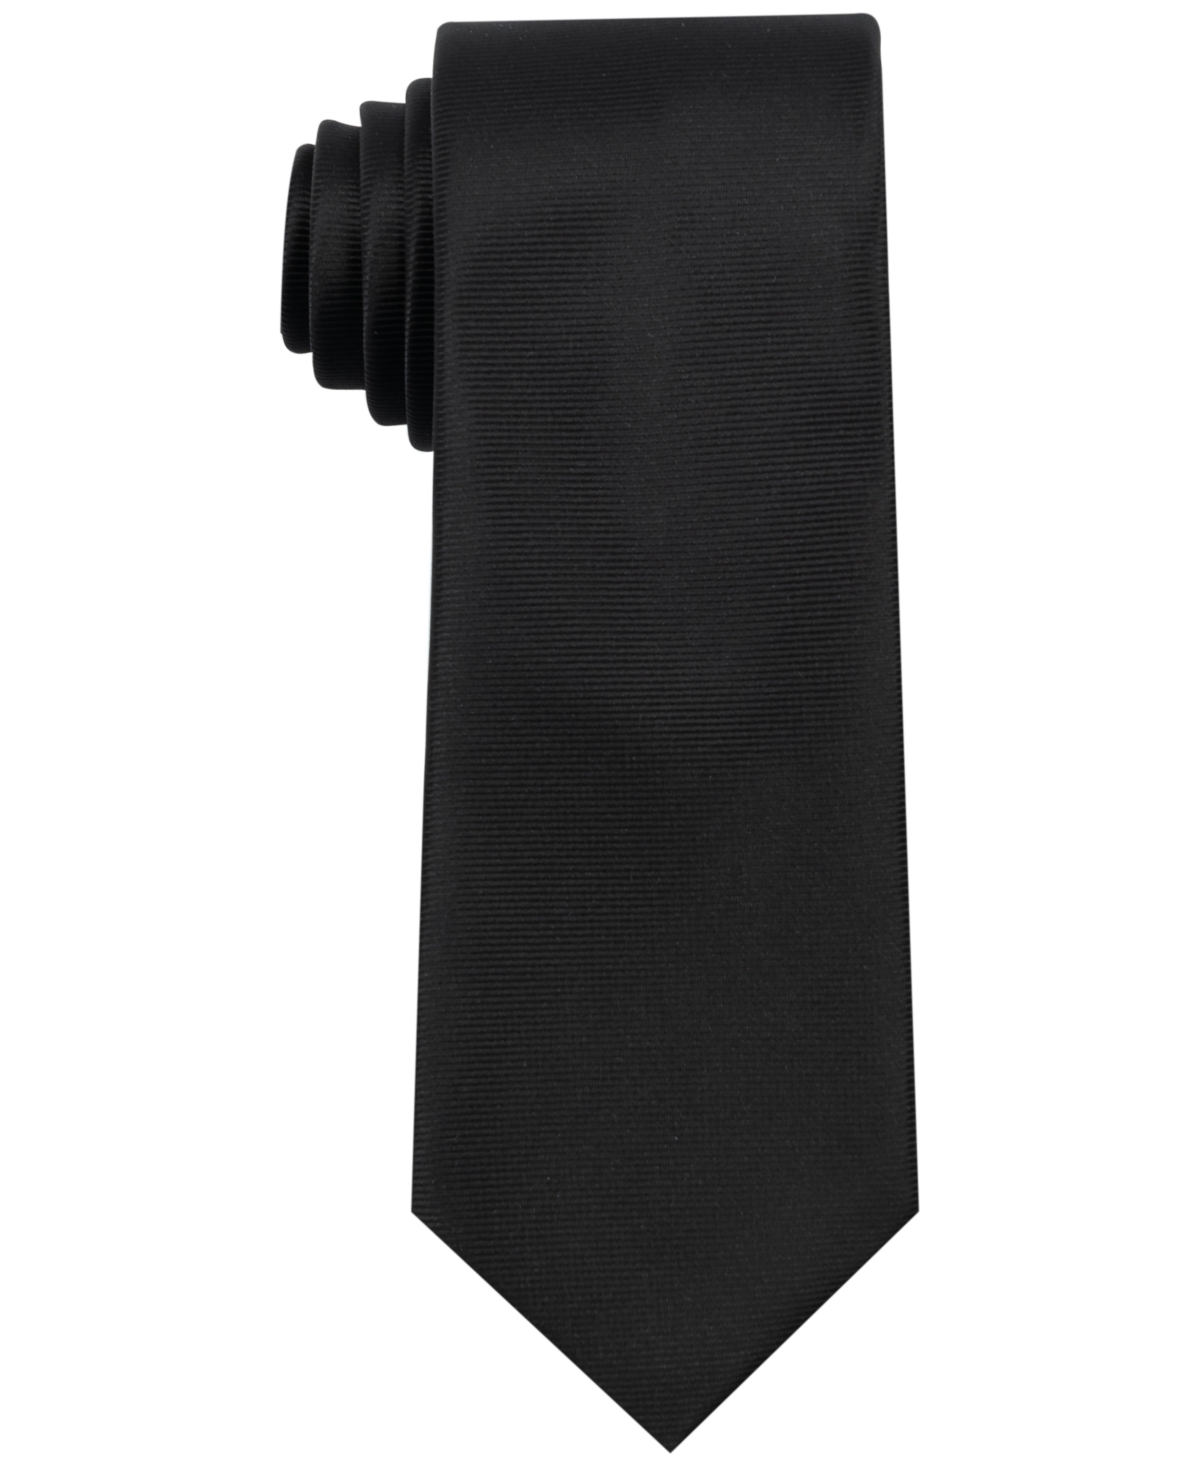 Calabrum Men's Classic Extra-long Solid Black Tie